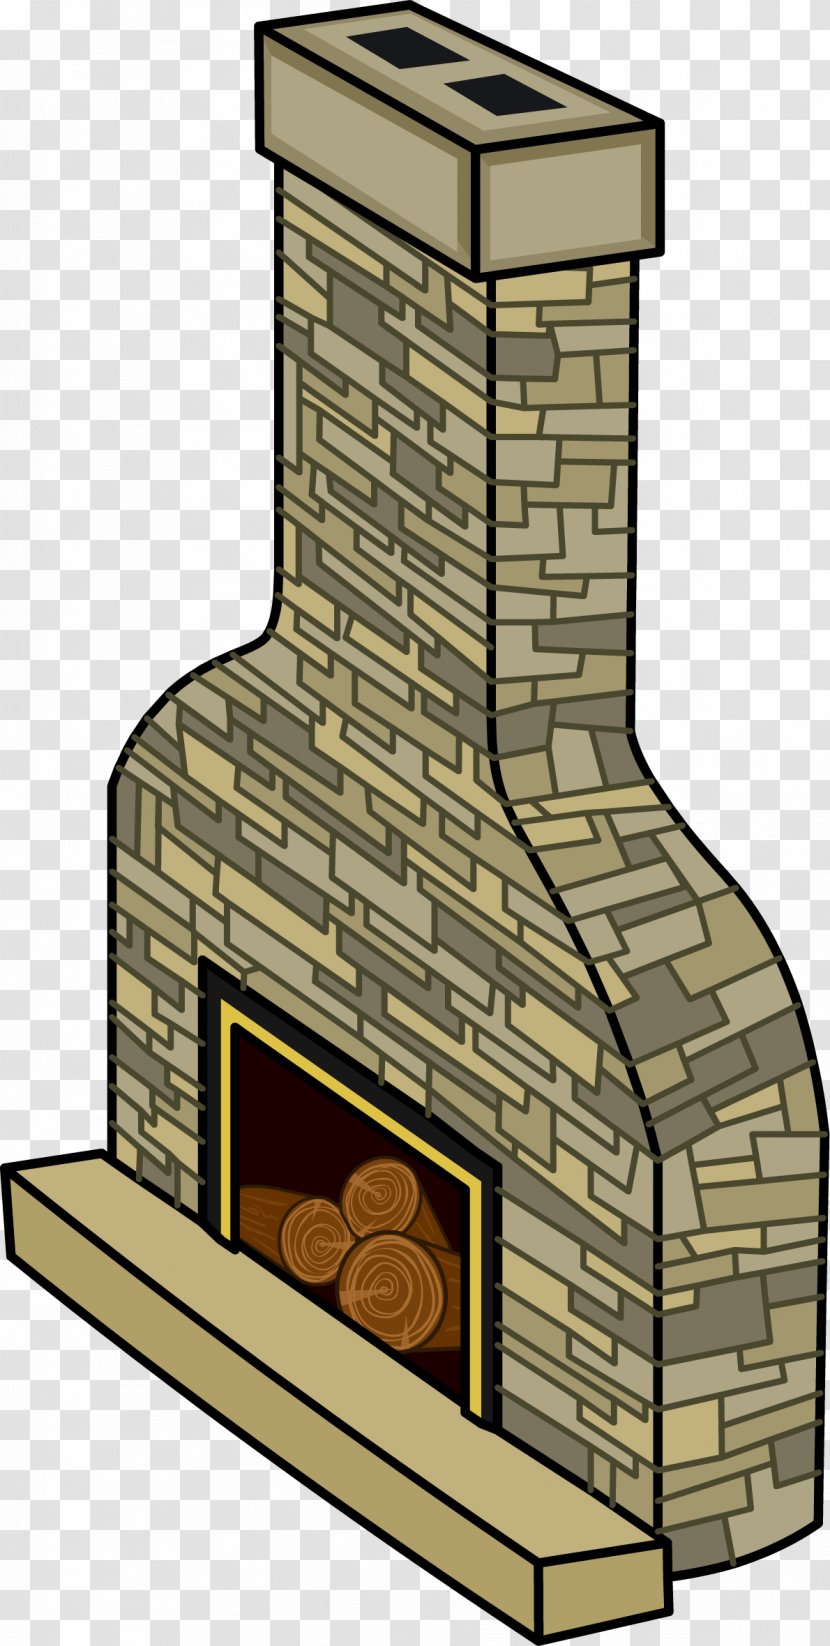 Hearth Fireplace Image Clip Art - Cartoon - Items Transparent PNG